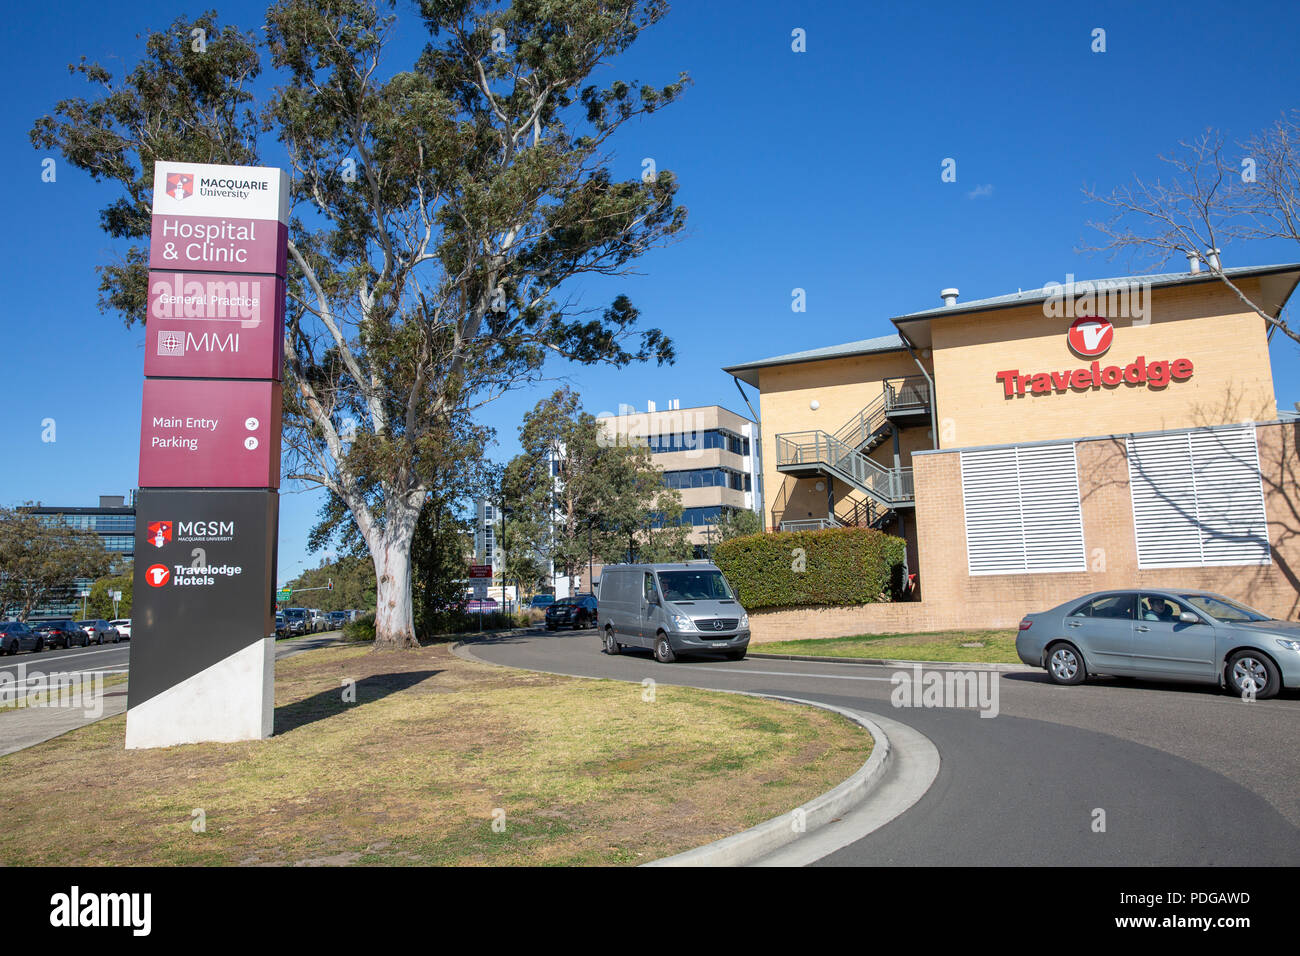 Travelodge hotel and accommodation at Macquarie University hospital, Macquarie Park,Sydney,Australia Stock Photo